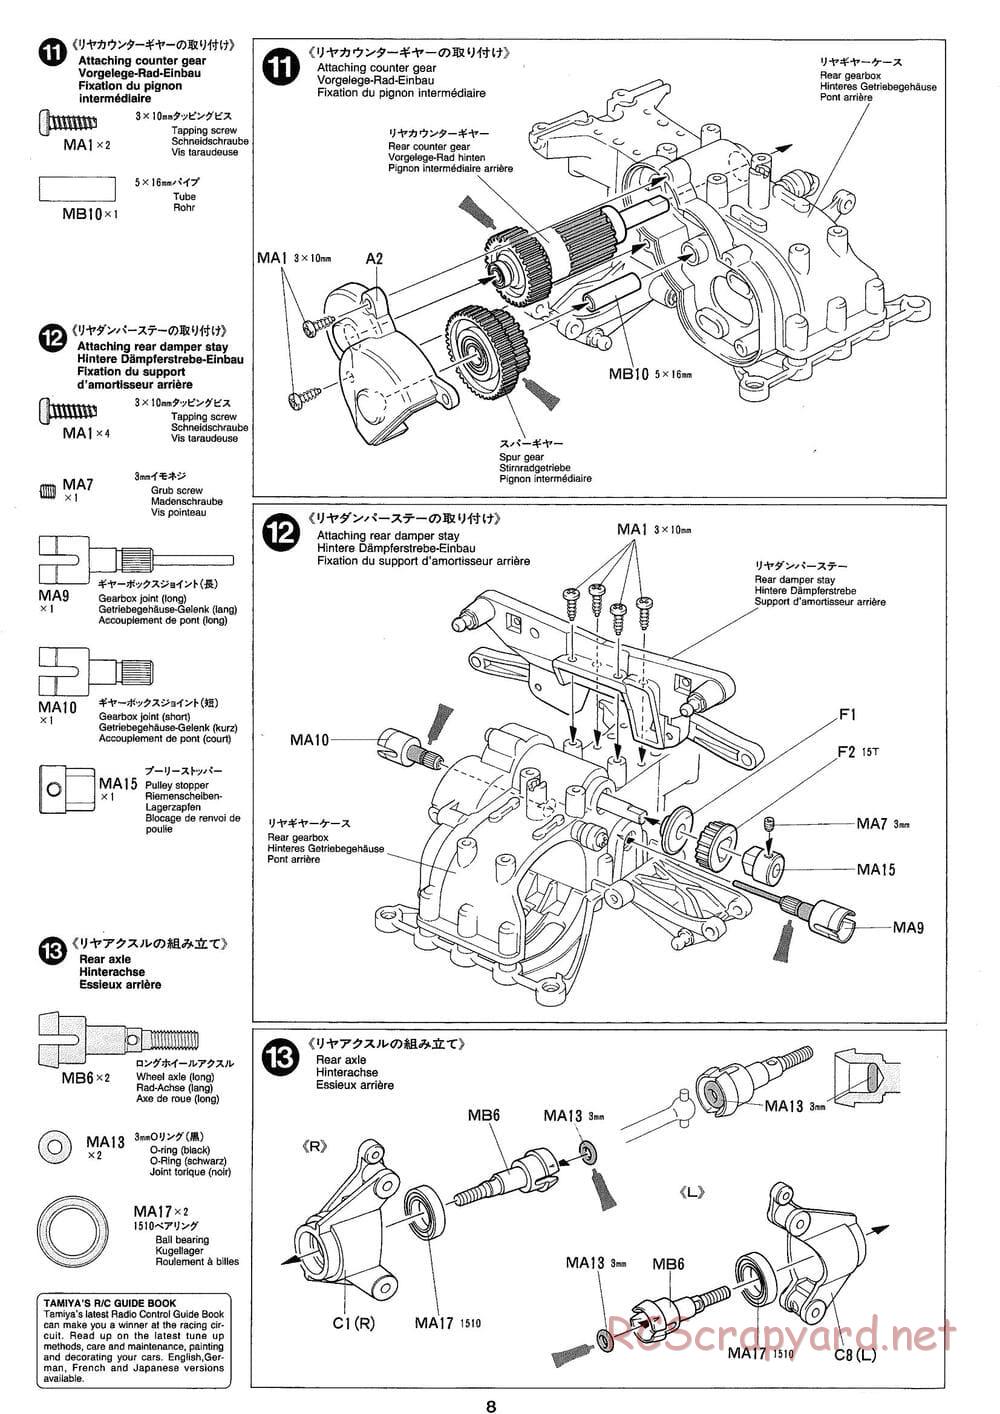 Tamiya - Mobil 1 NSX - TA-03R Chassis - Manual - Page 8